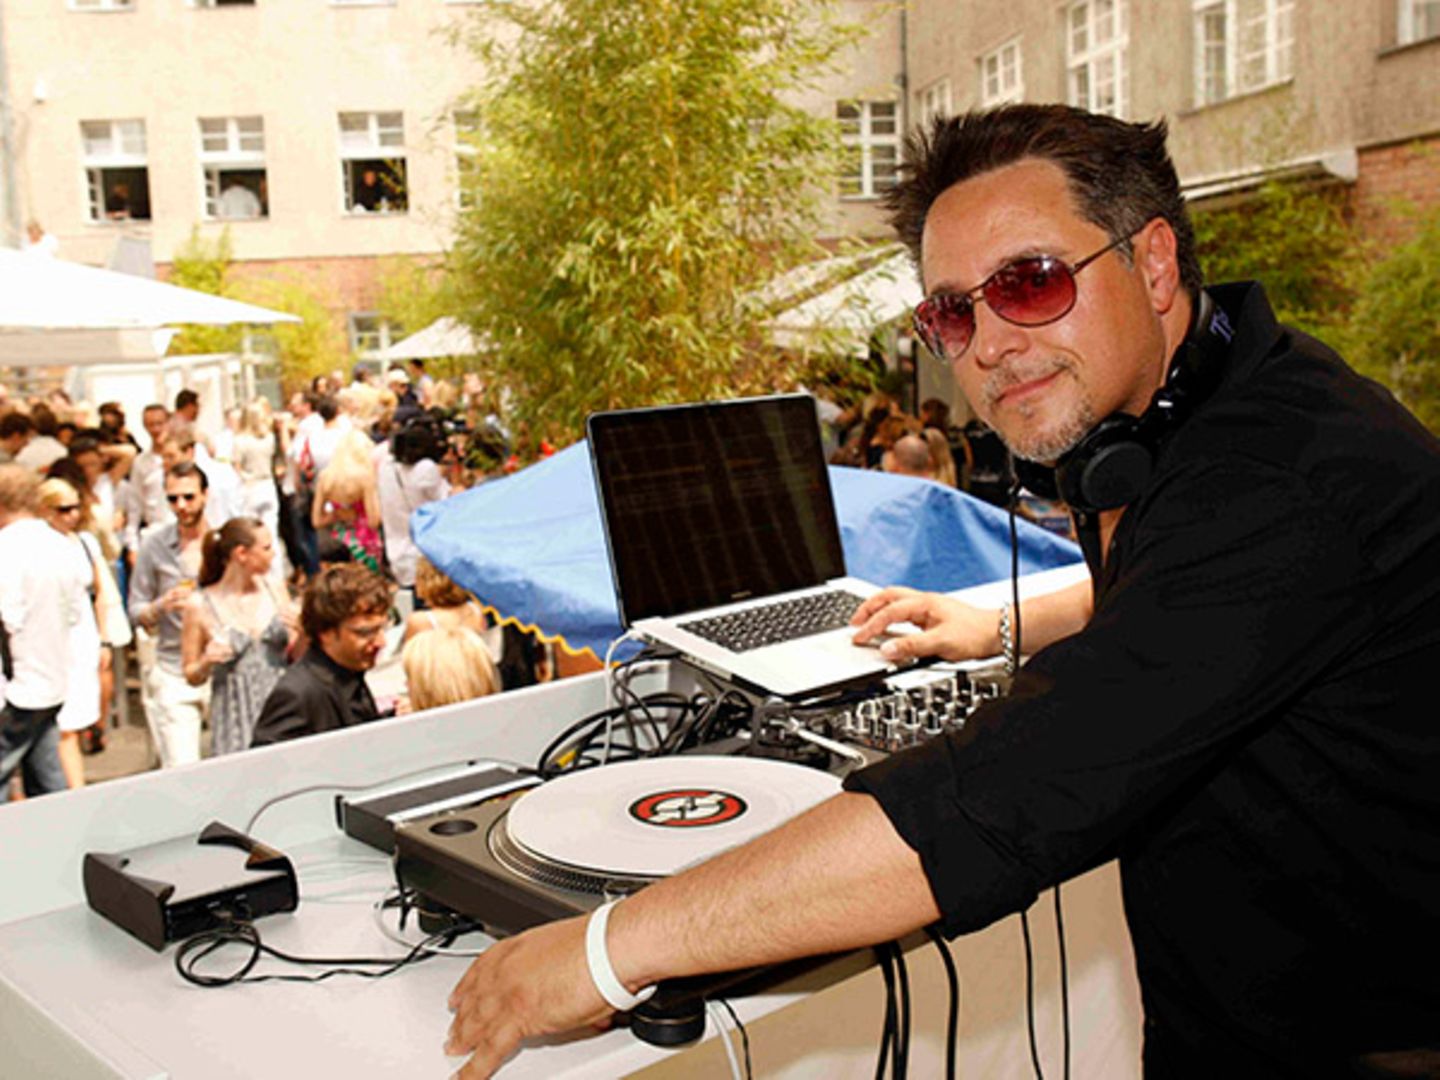 Coole Sounds auf cooler Party: DJ Sinan Mercenk